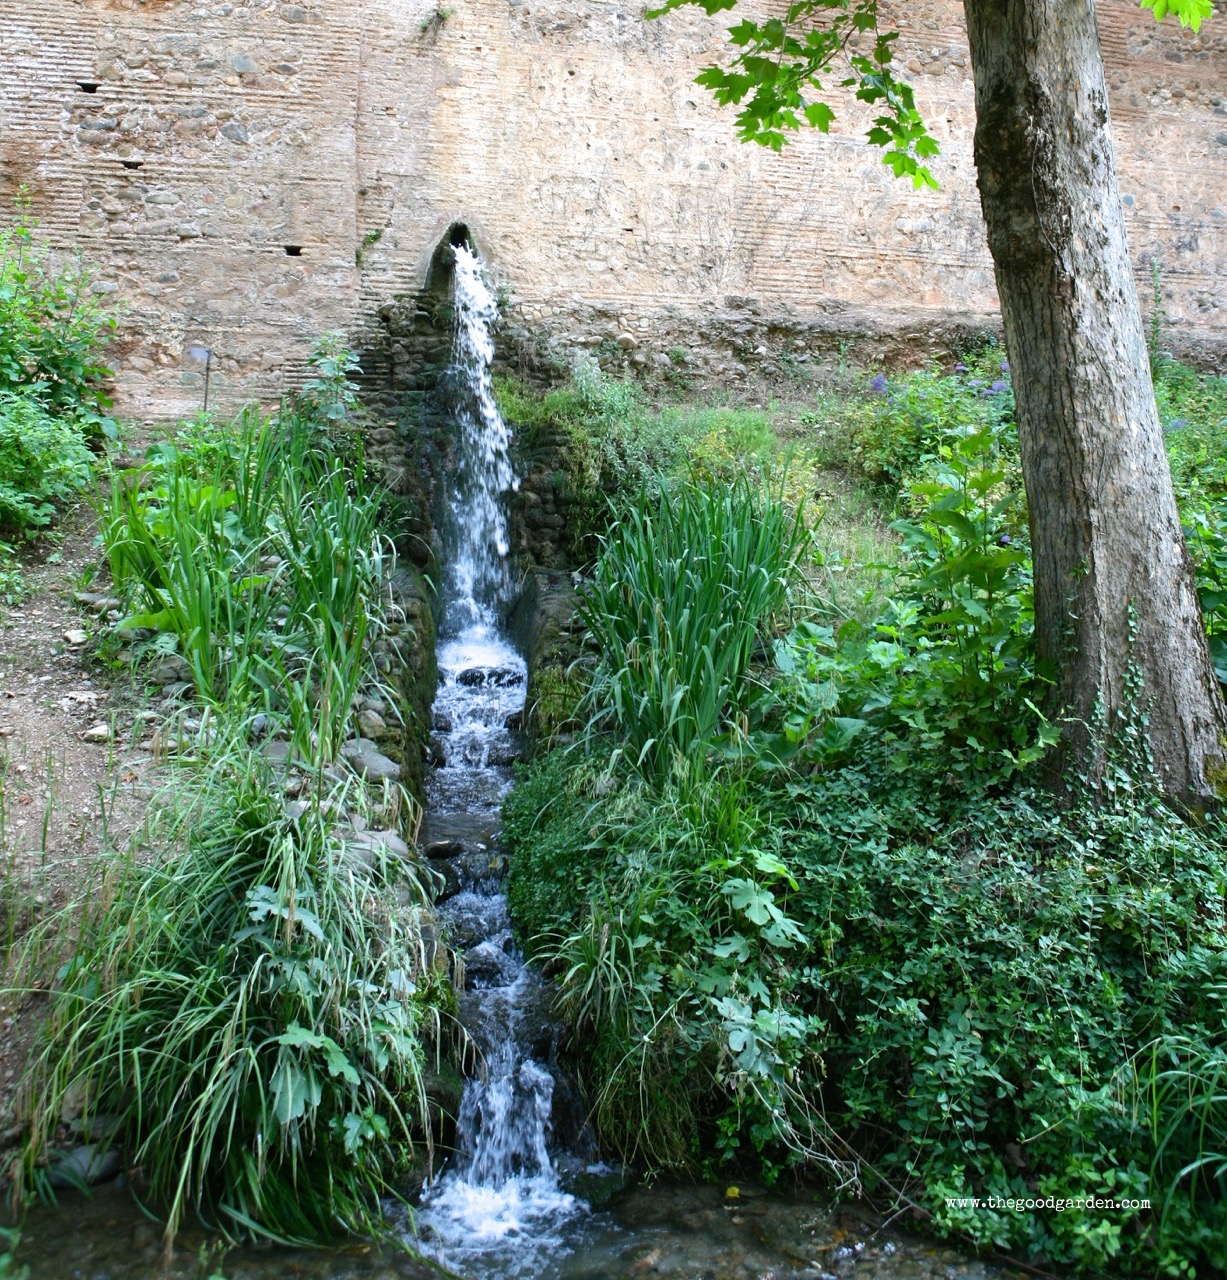 thegoodgarden|alhambra|walls|8595.jpg